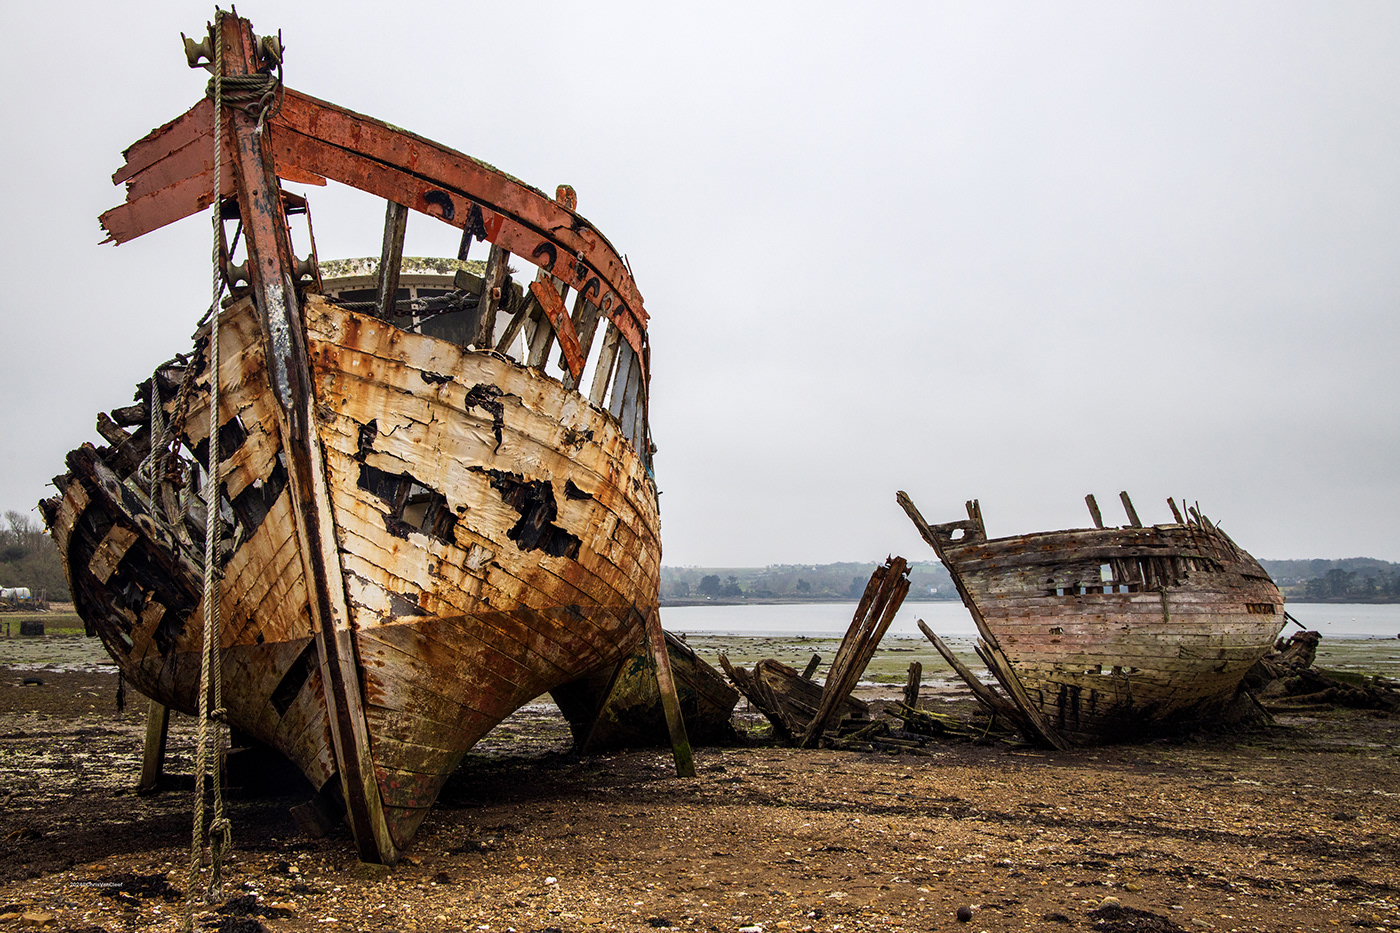 abandoned Nature abandoned places decaying forgotten Shipwrecks urbex photography